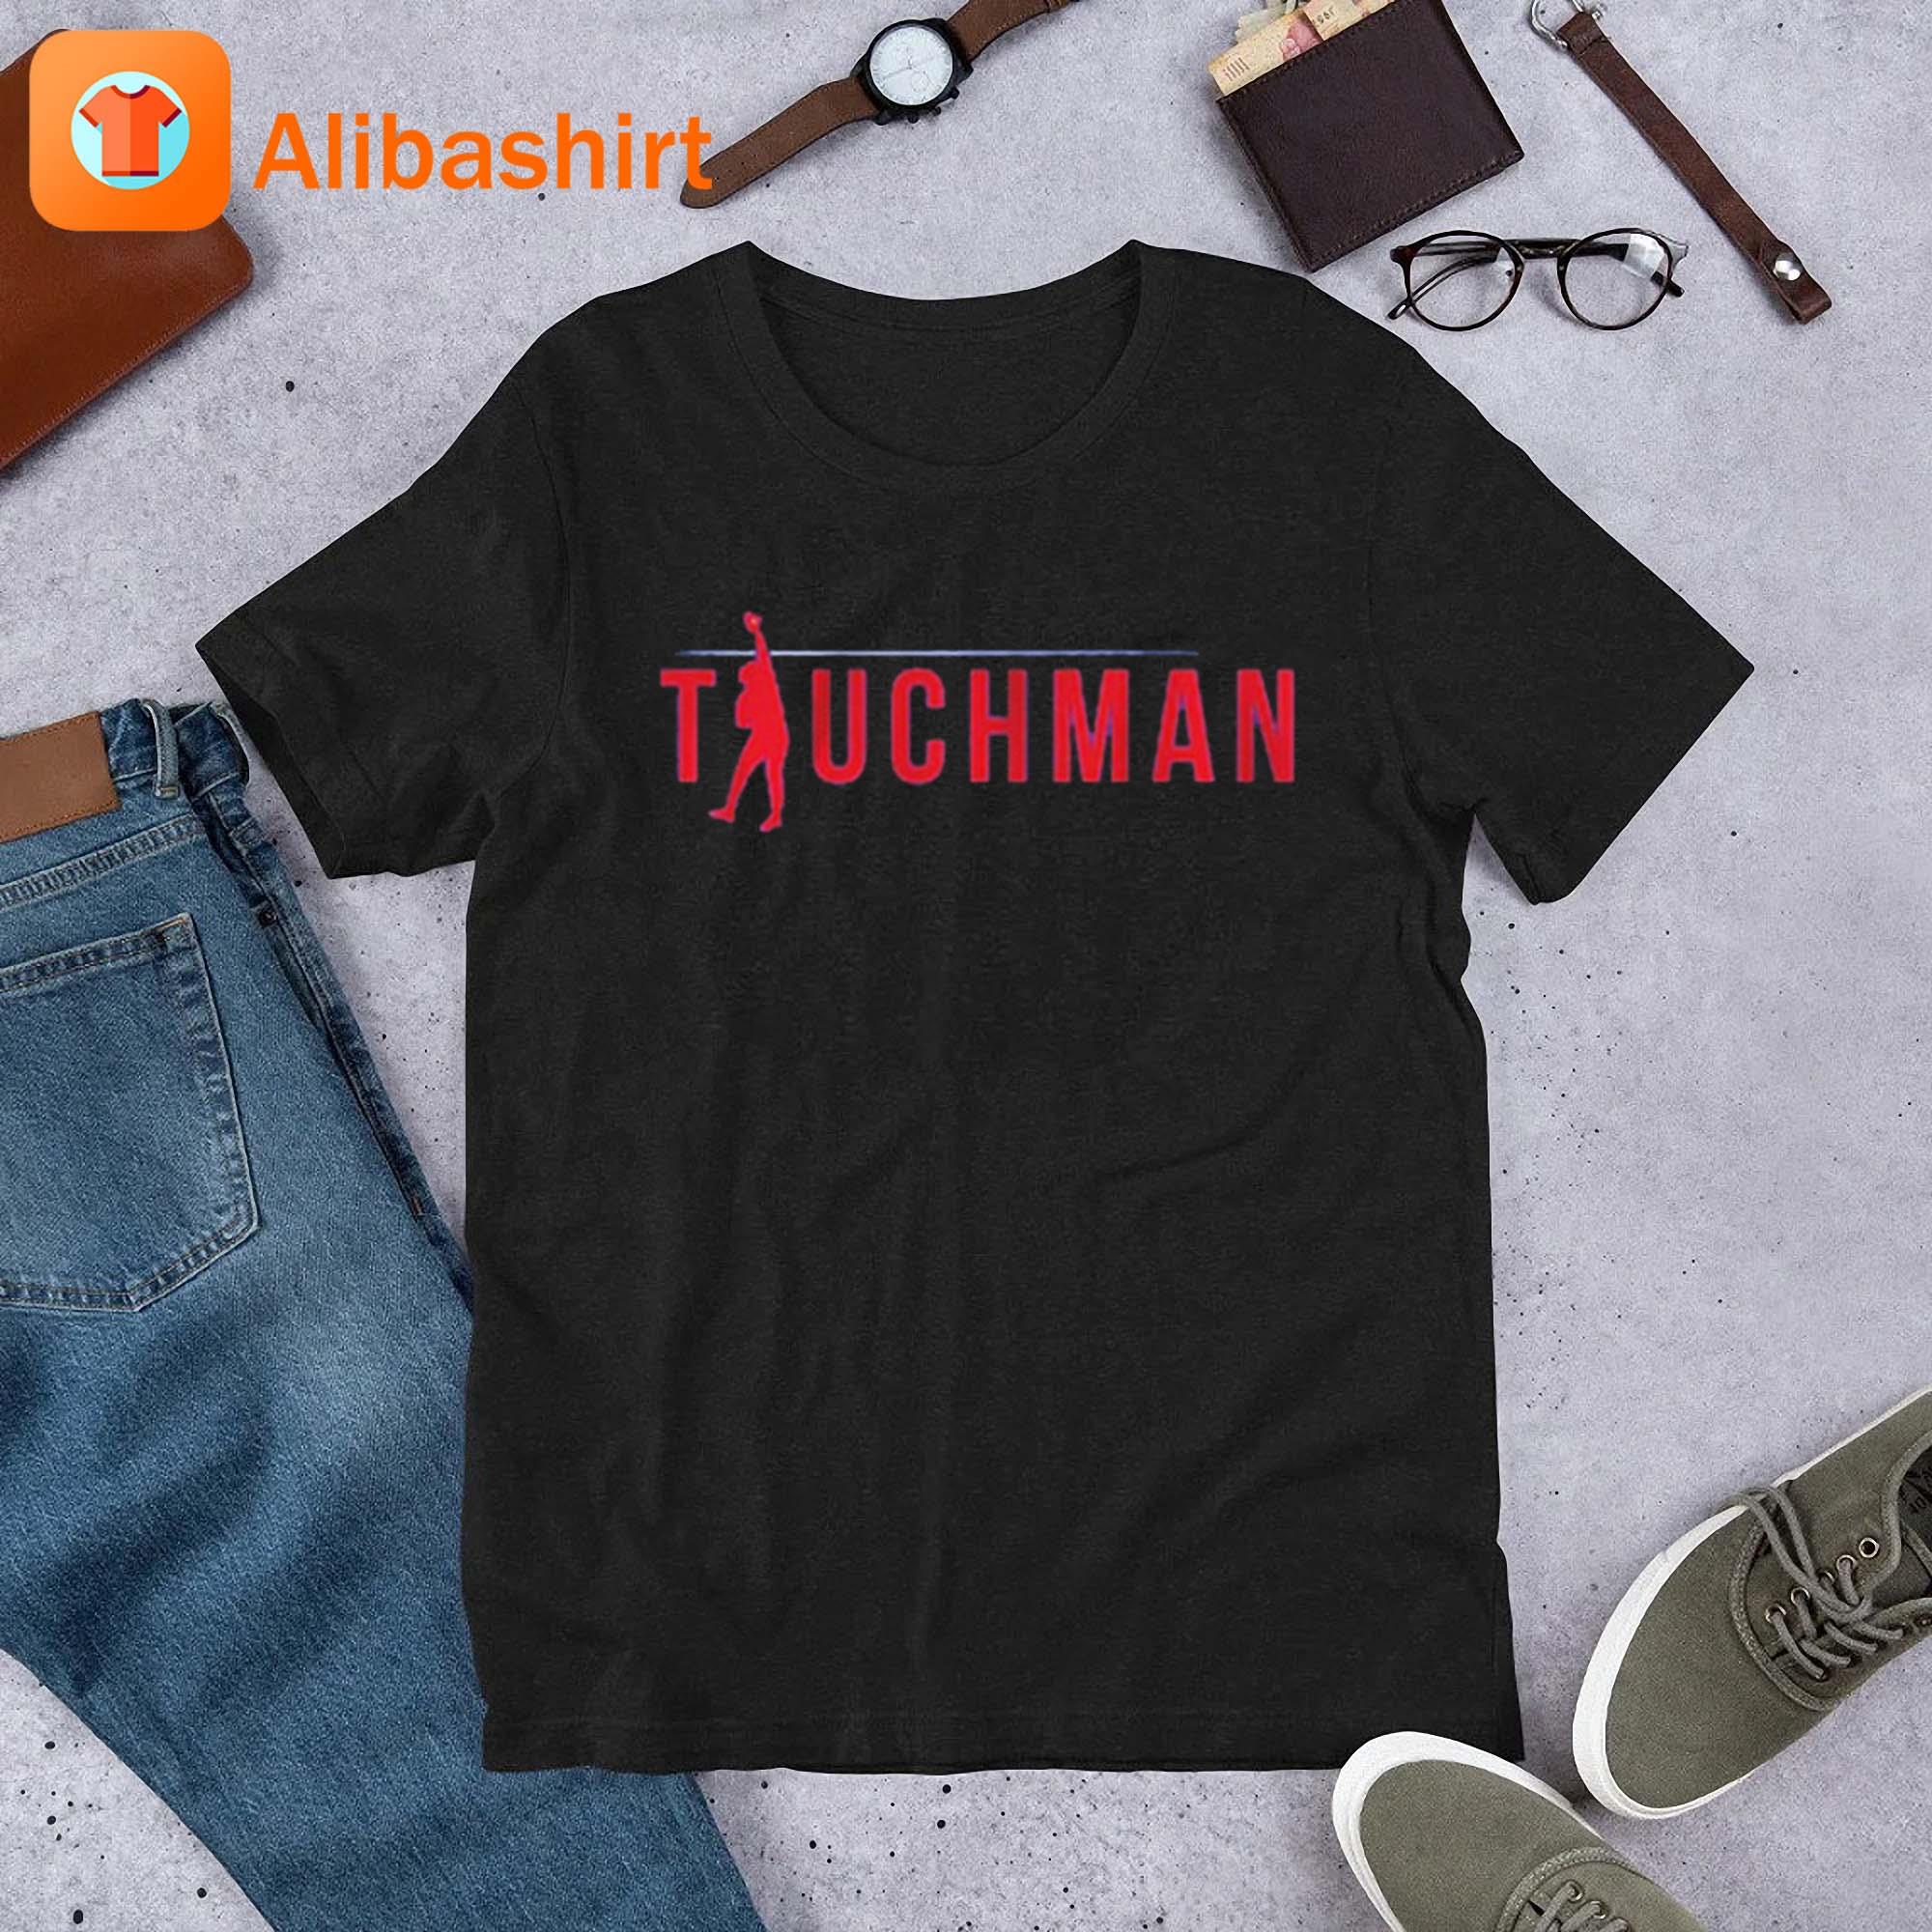 Mike Tauchman TAUCHMAN Shirt